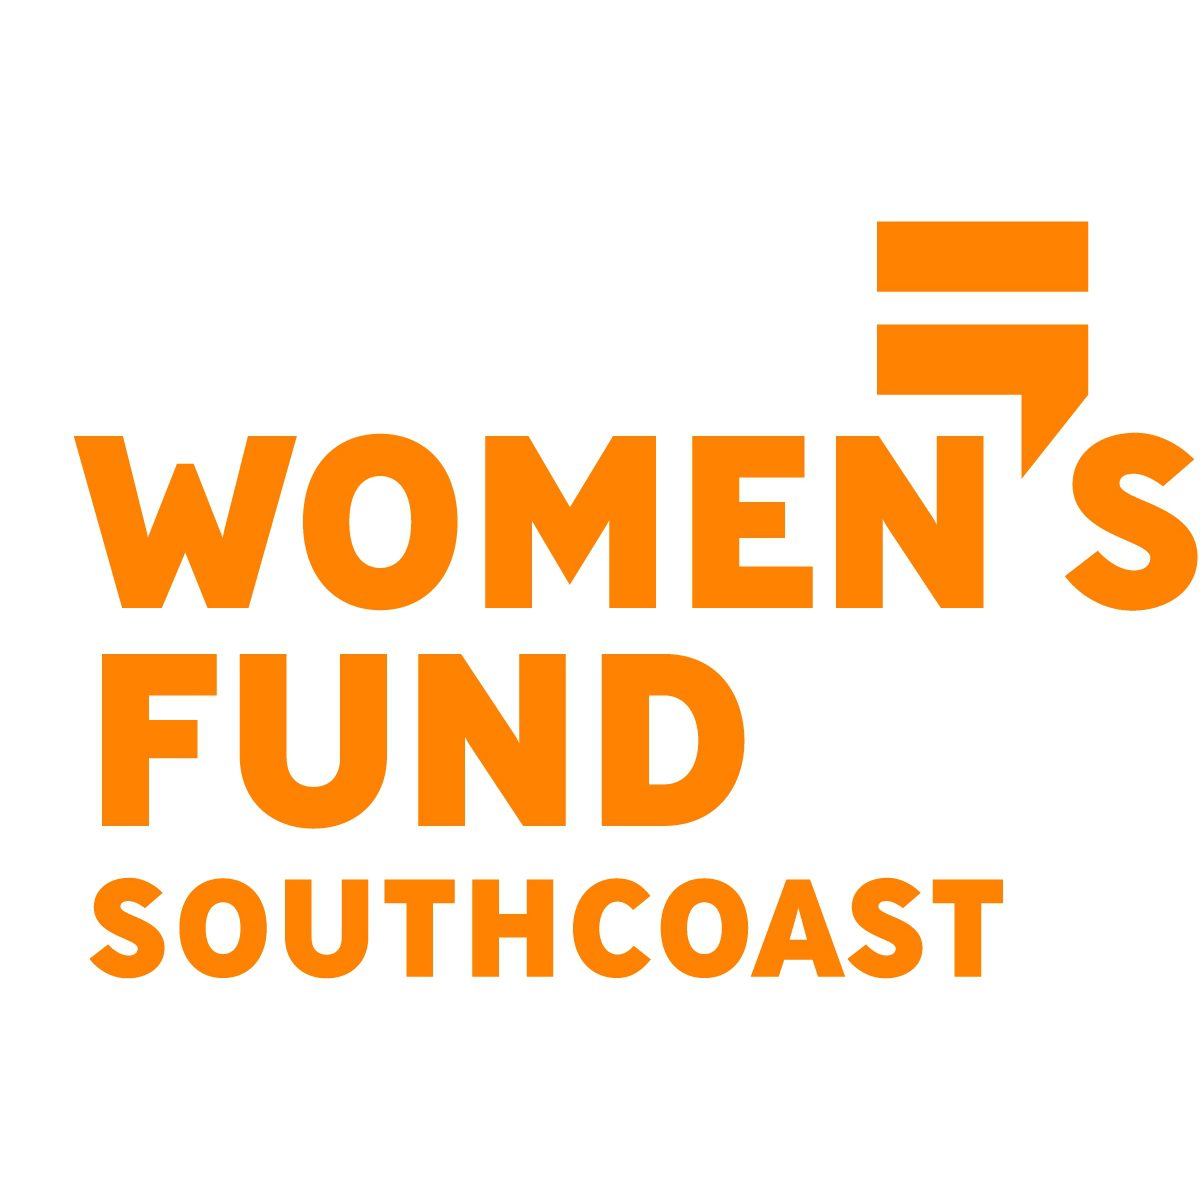 Women's Fund SouthCoast logo